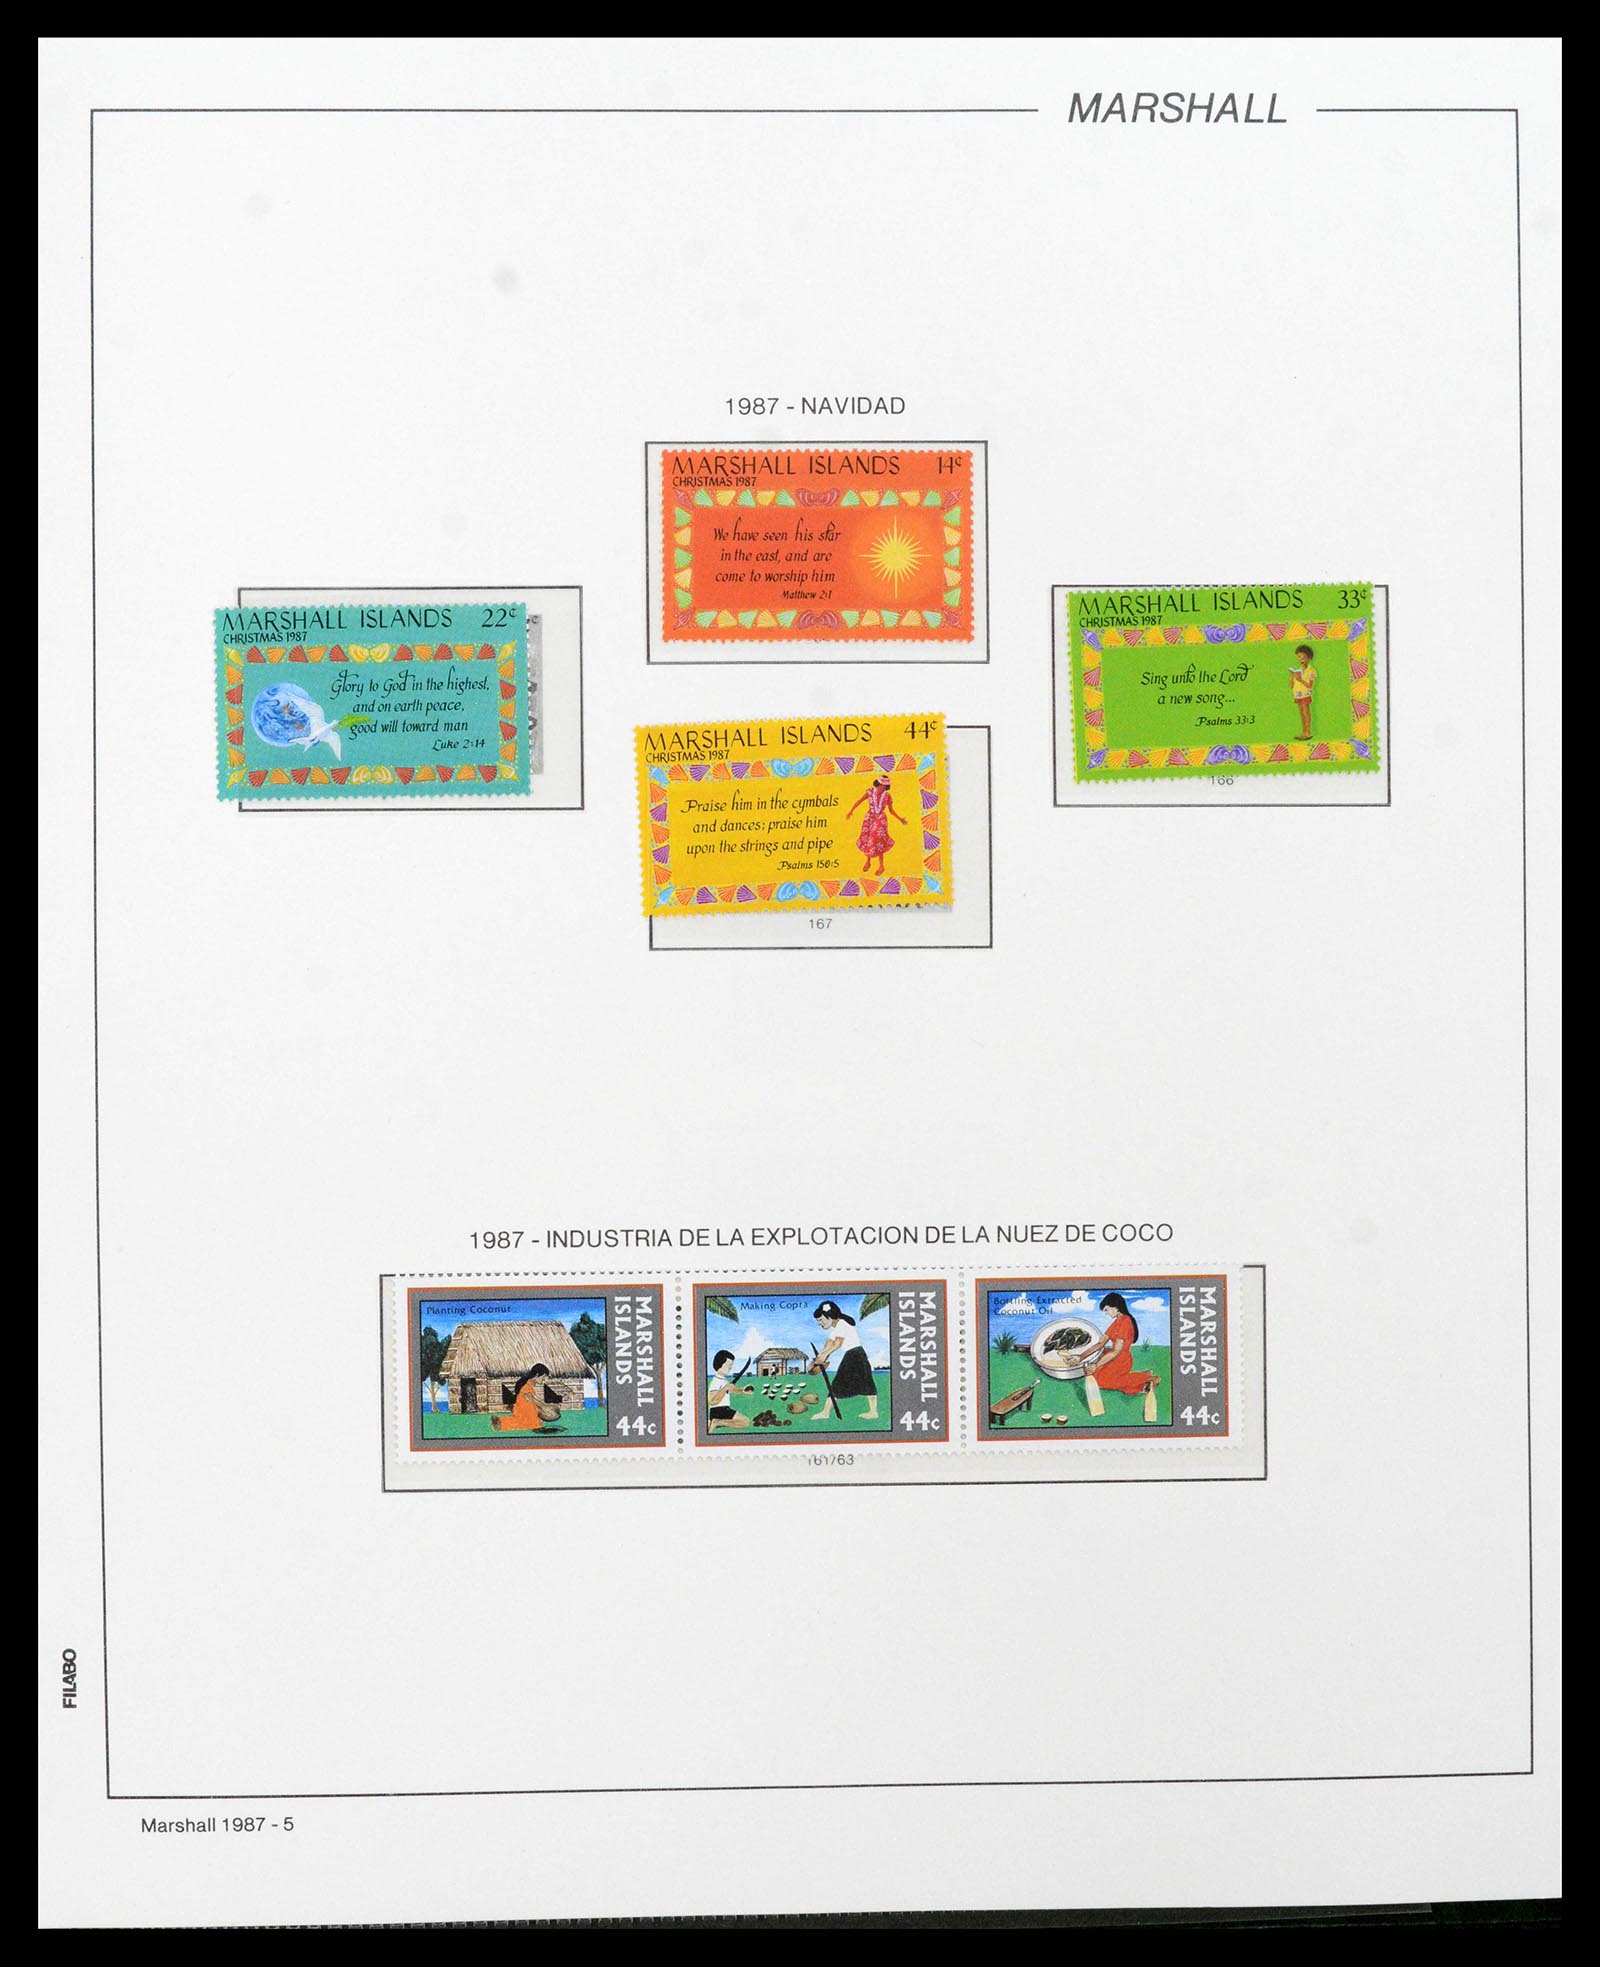 39222 0126 - Stamp collection 39222 Palau, Micronesia and Marshall islands 1980-1995.